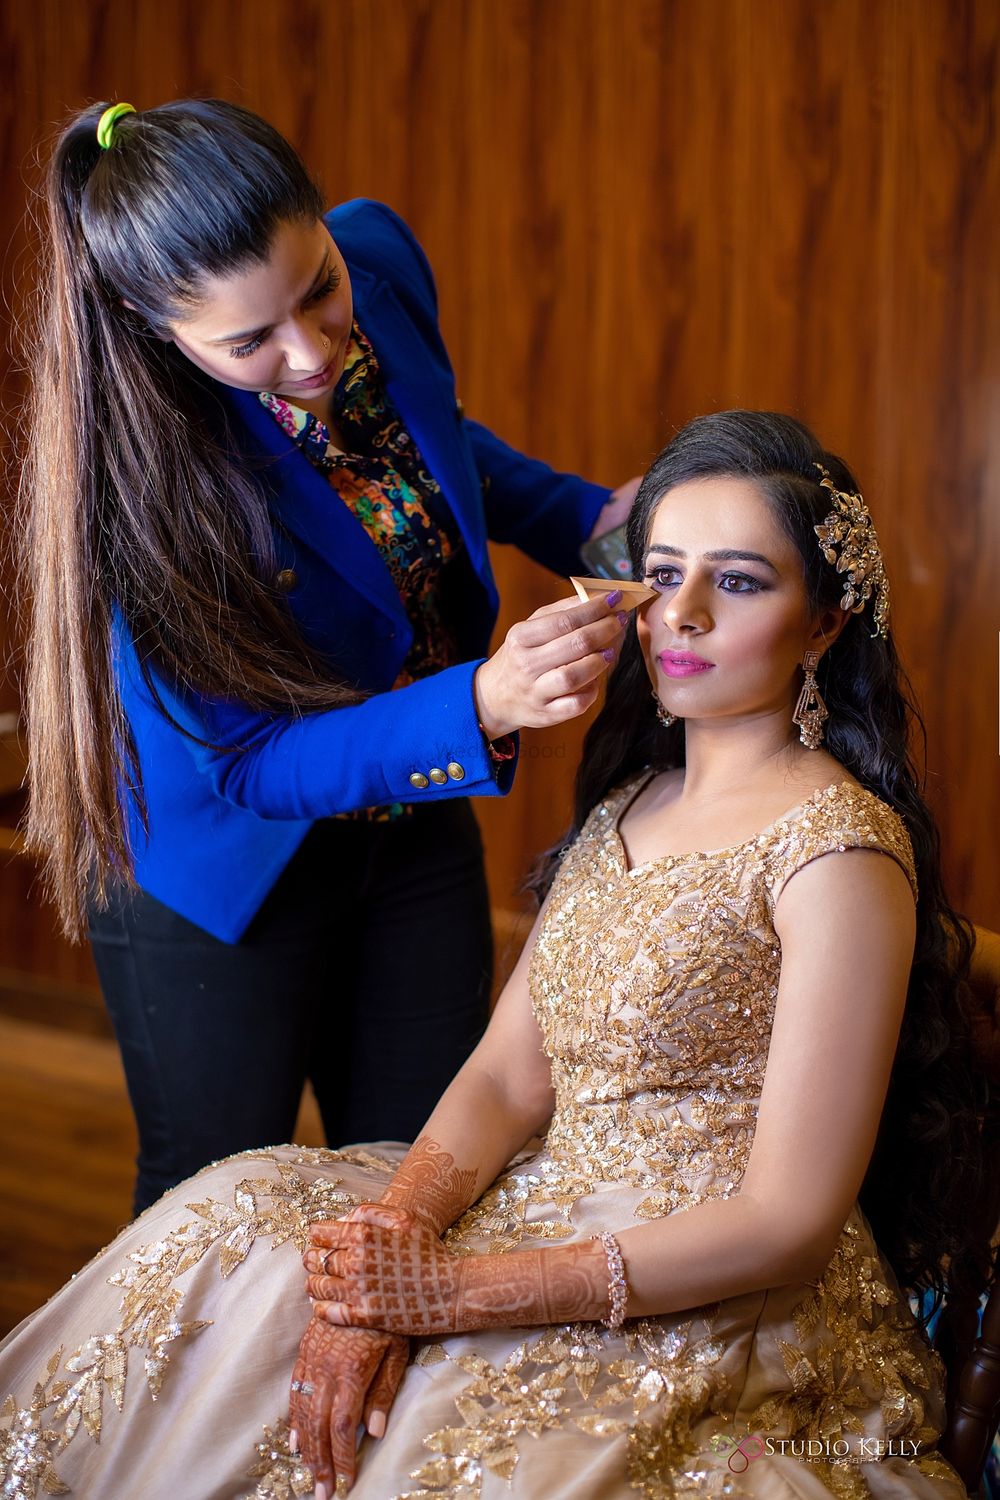 Photo From Engagement Makeup - By Gunjan Dipak Makeovers